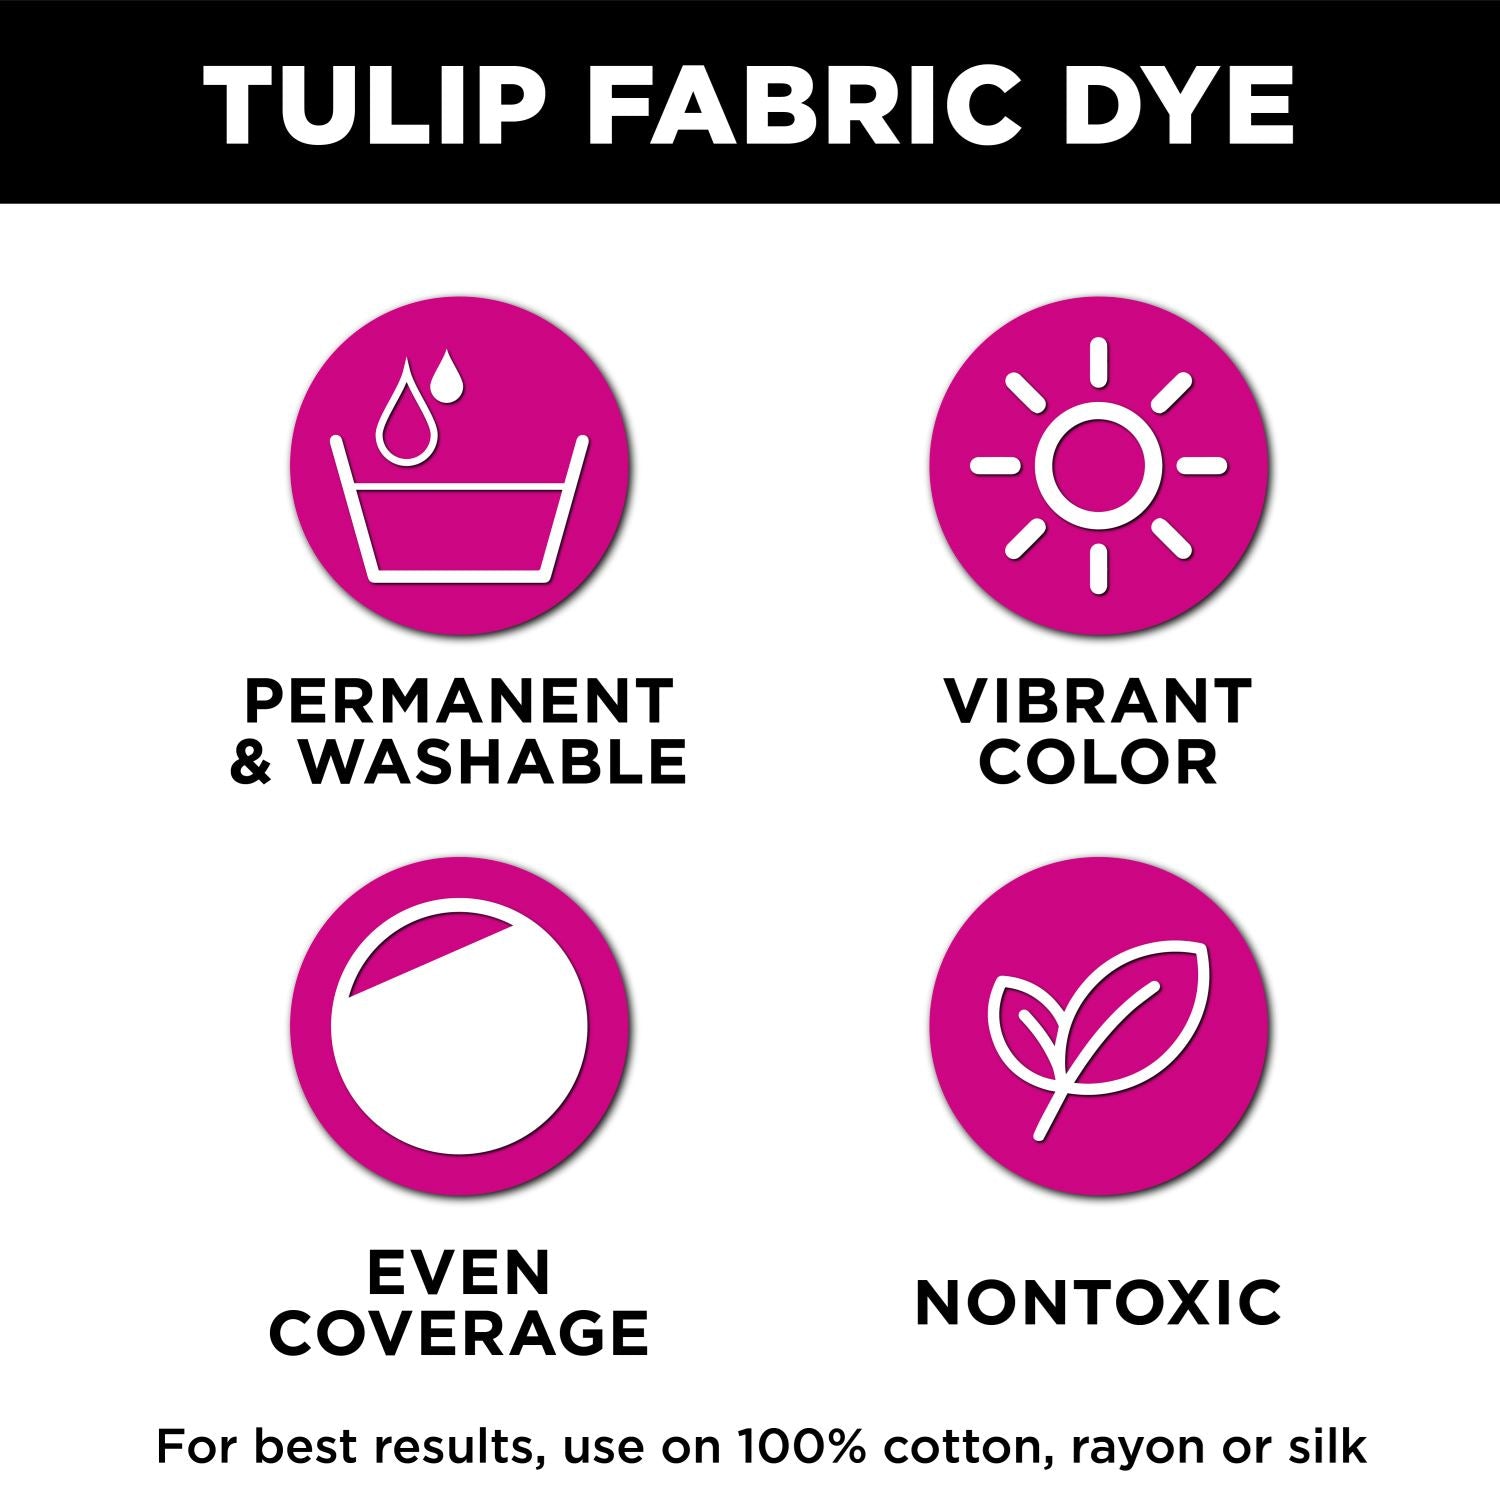 Tulip Permanent Fabric Dye- Black (26588)